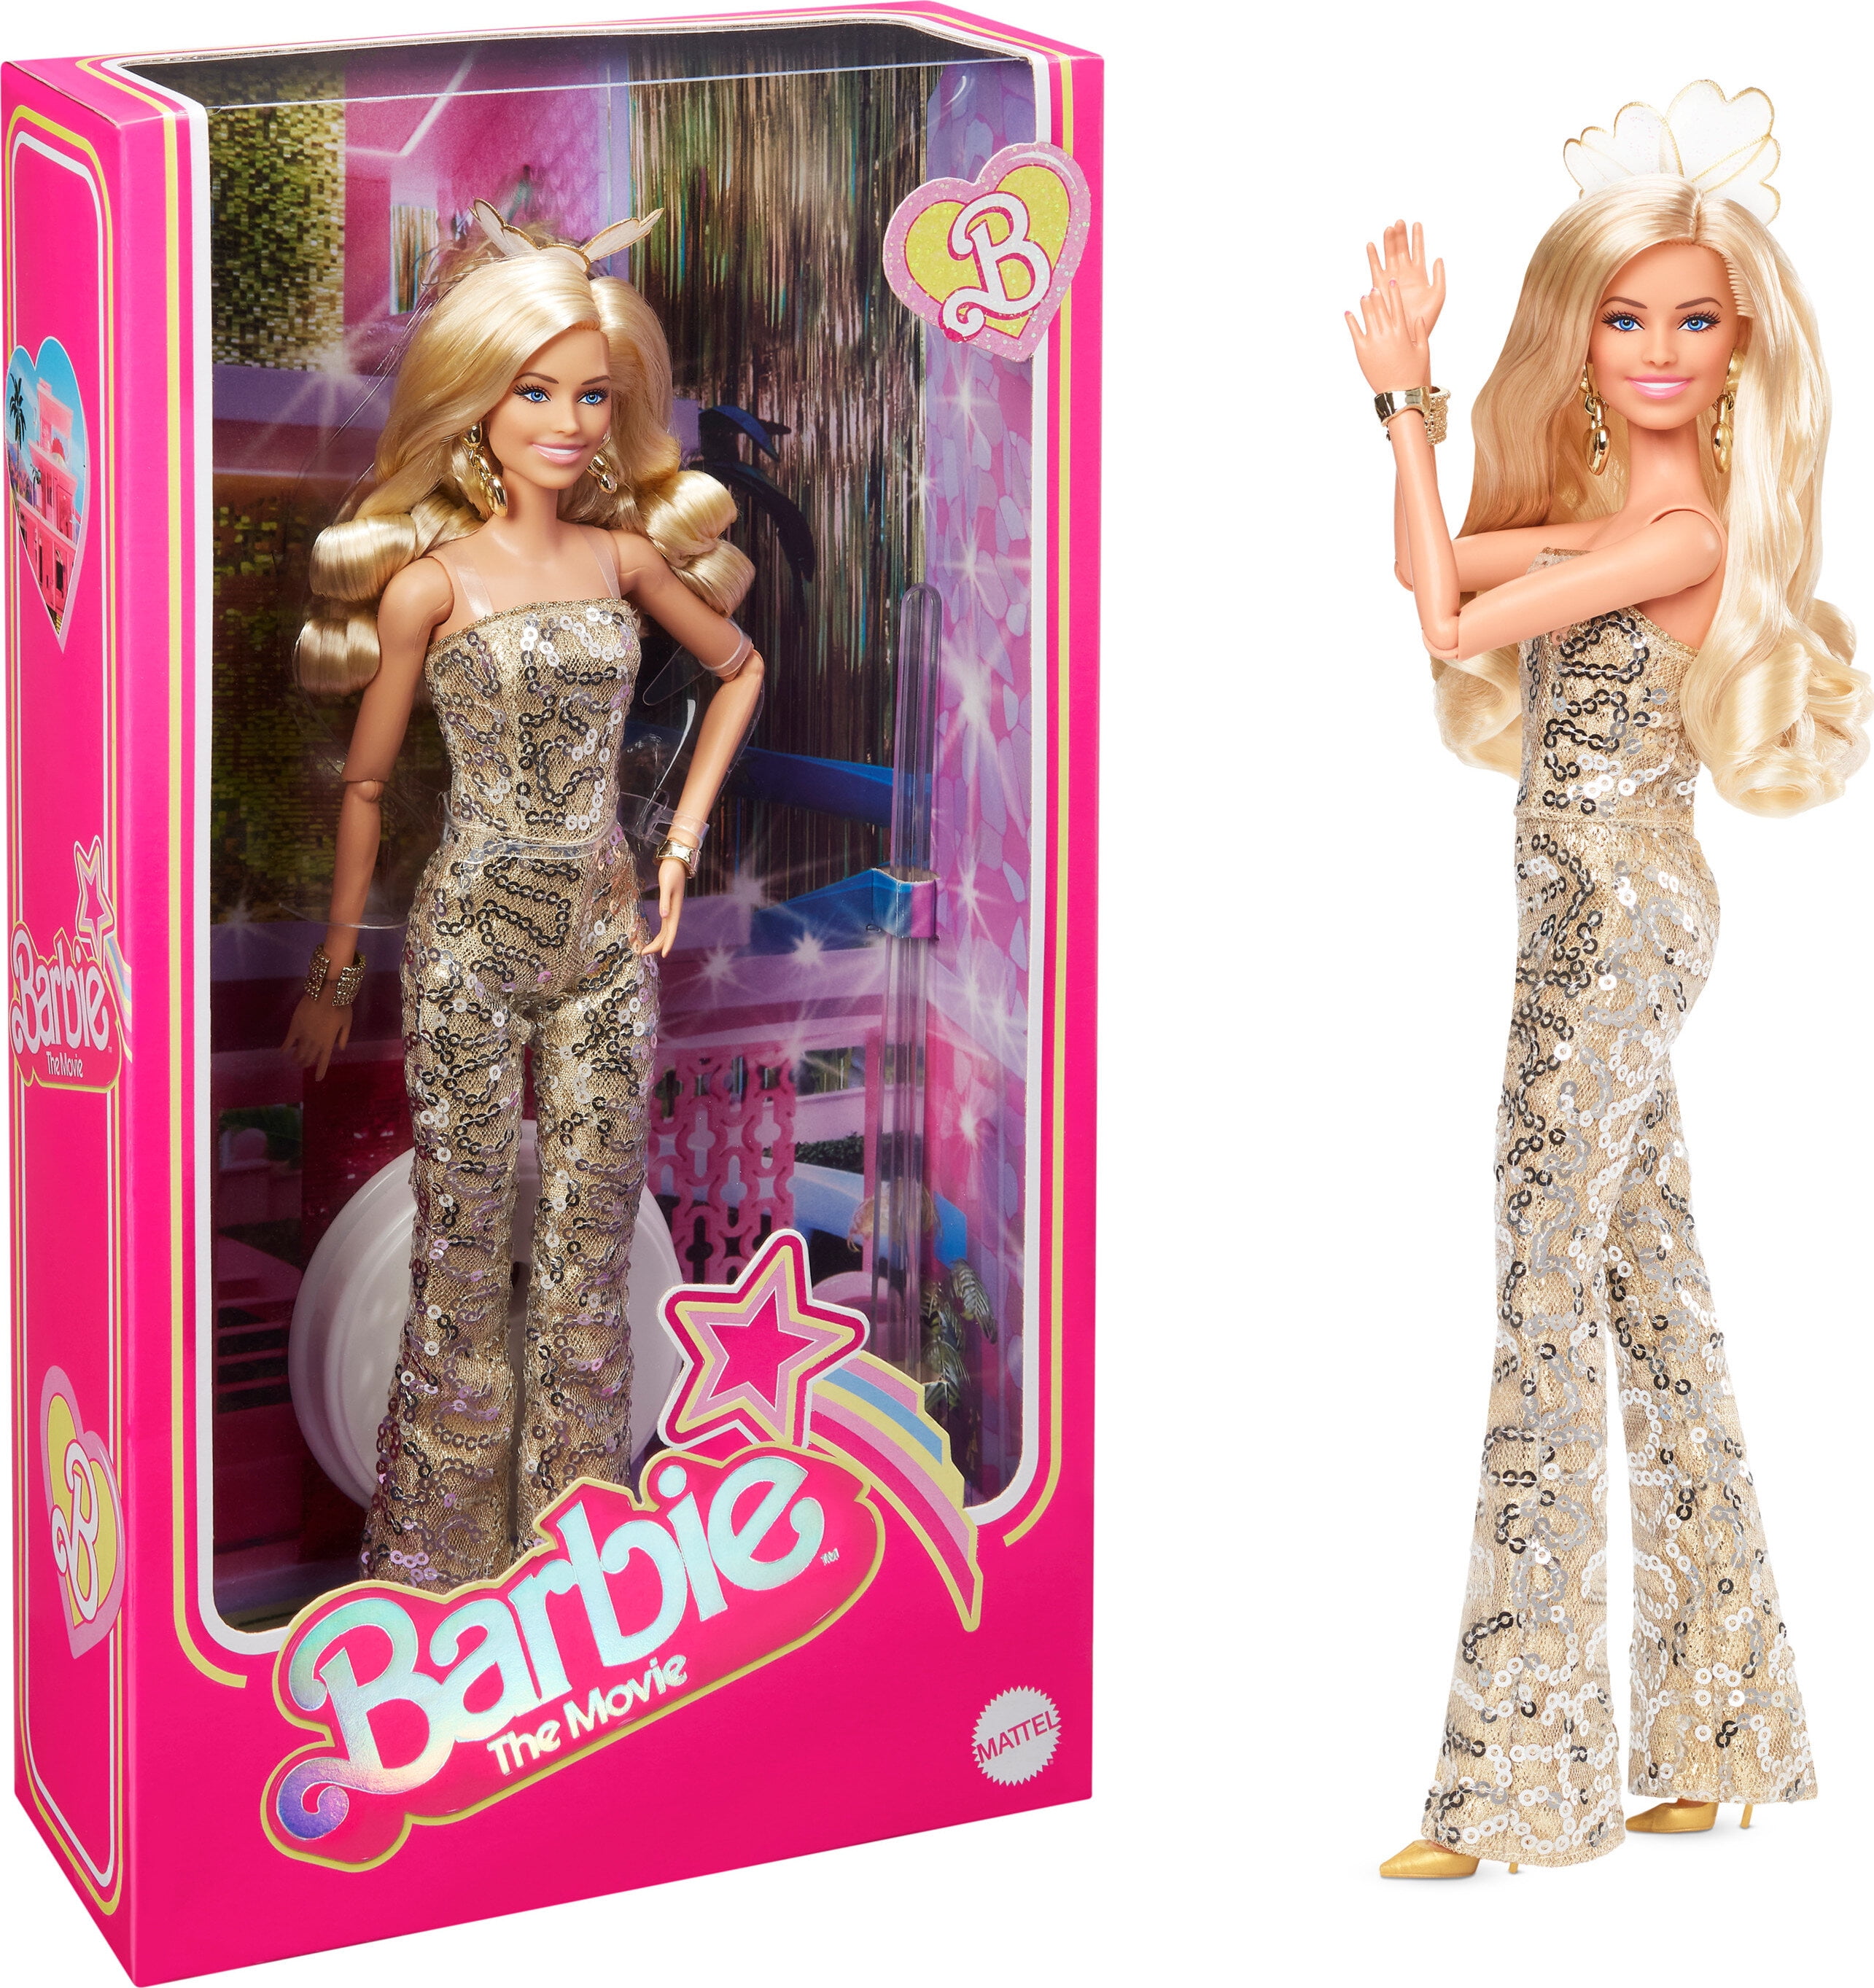 More Barbie Movie Dolls!